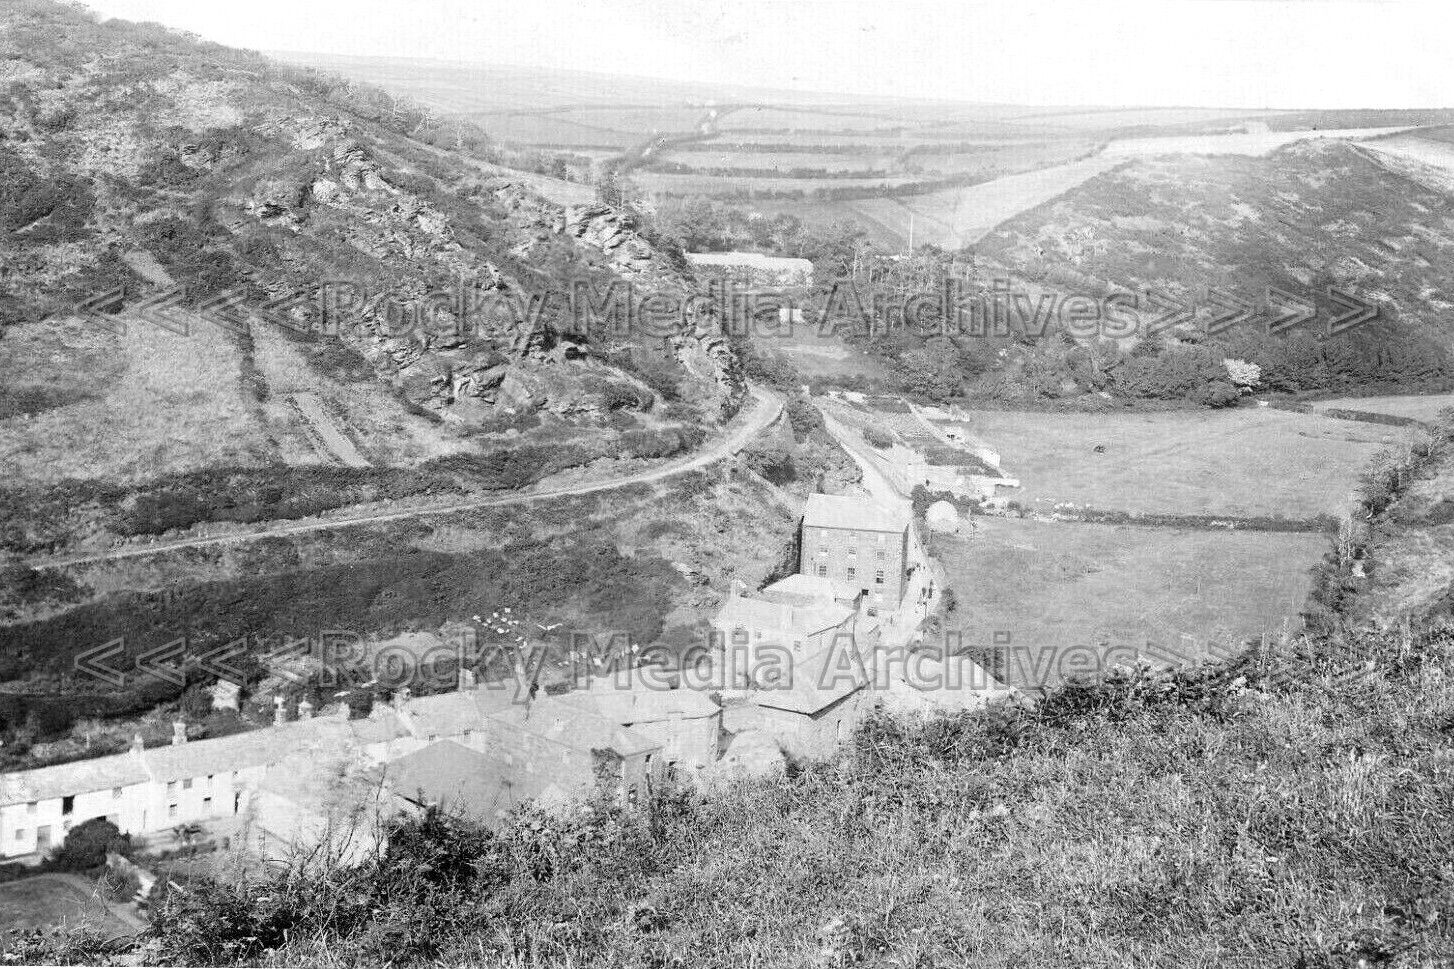 uqq-21 View From Hillside, Boscastle, Cornwall 1916. Photo